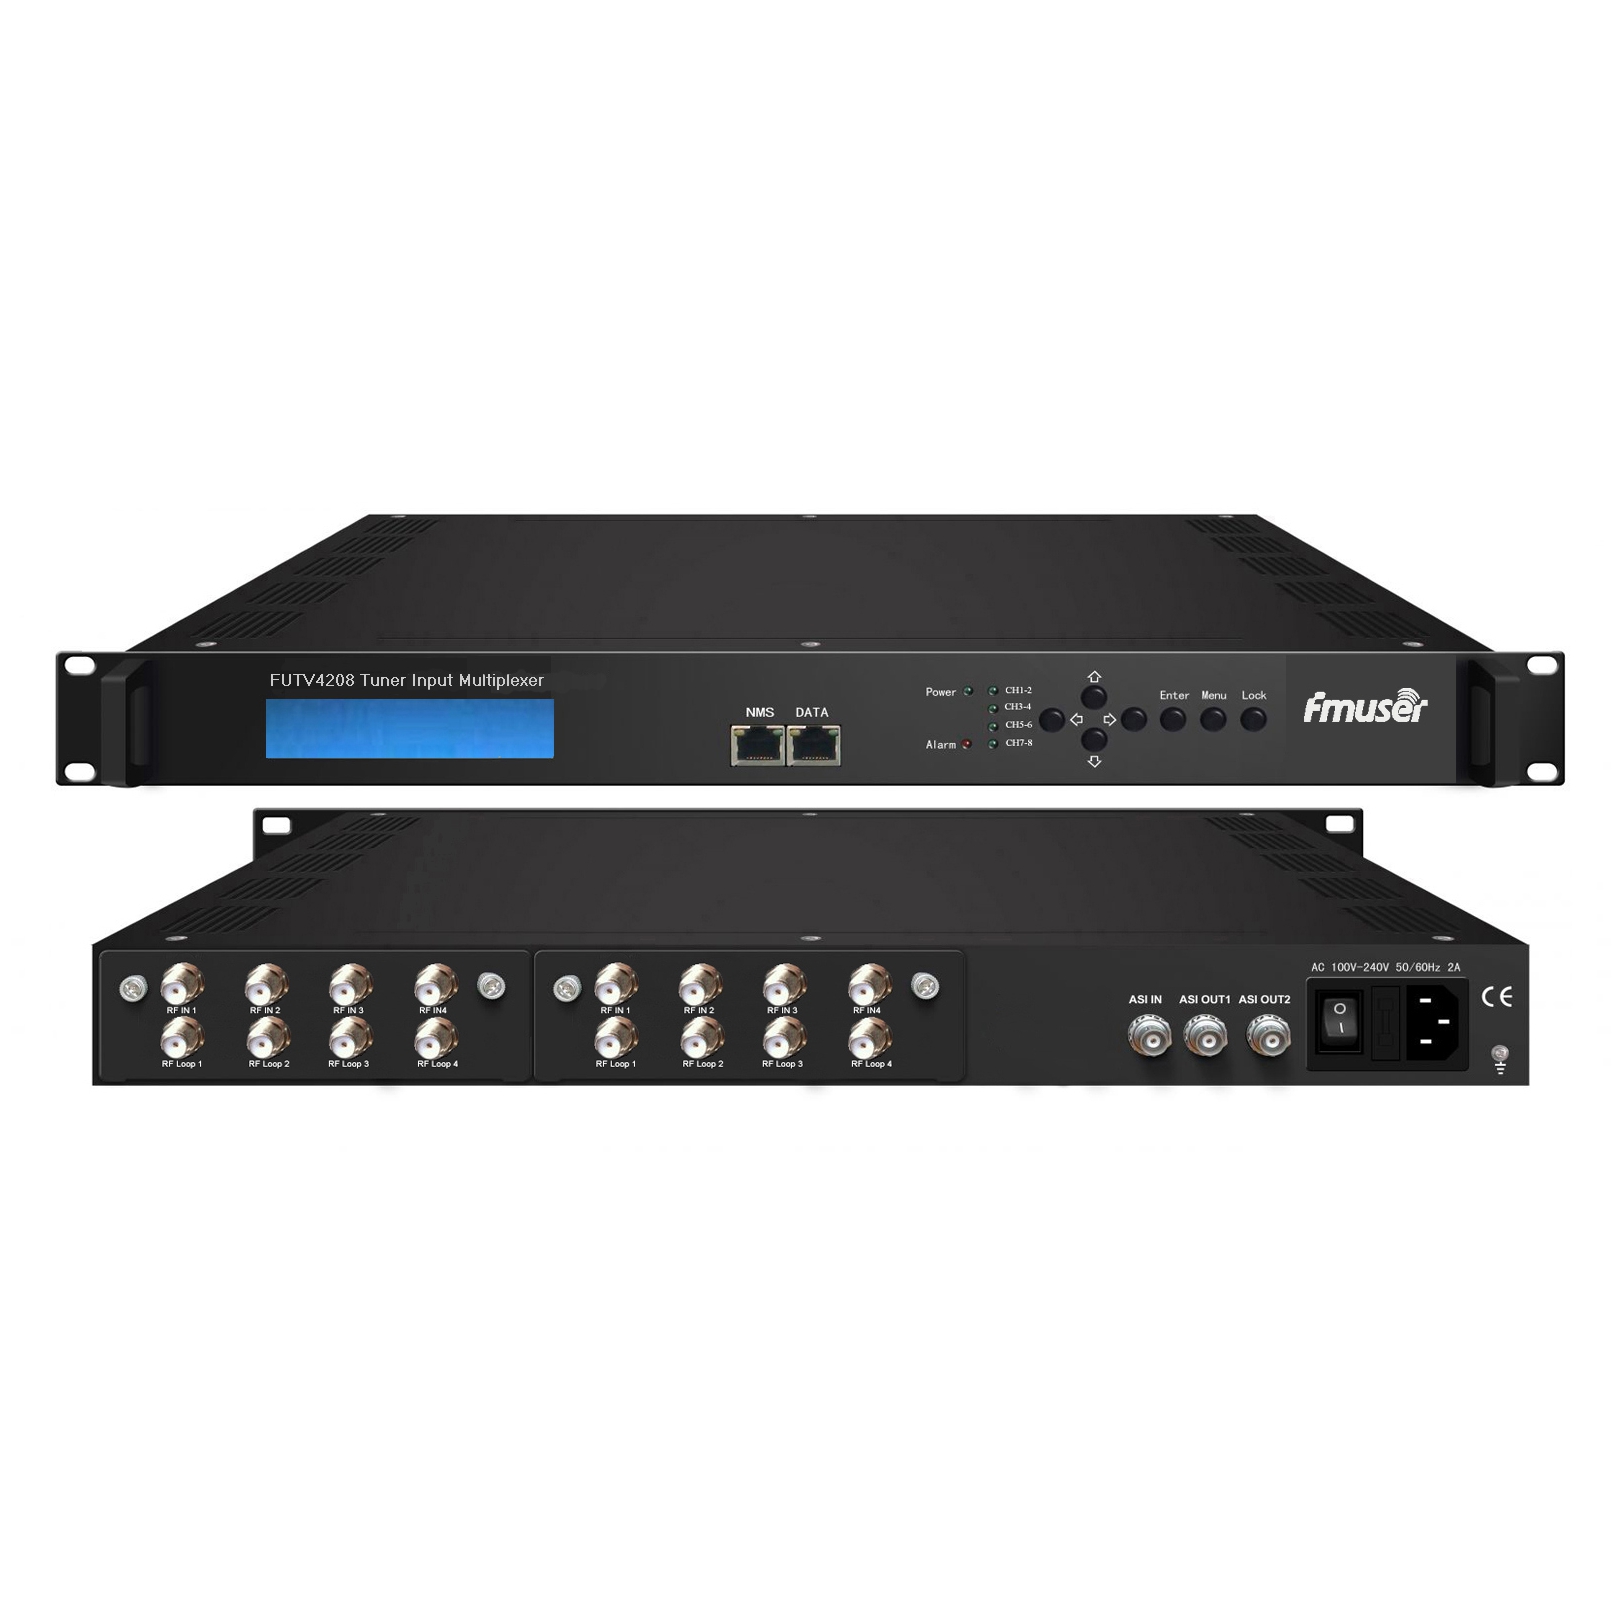 FMUSER FUTV4208 8 Tuner IRD (8 DVB-S2 / T RF Input, 1 ASI In, 2 ASI 1 IP Output) Multiplexer